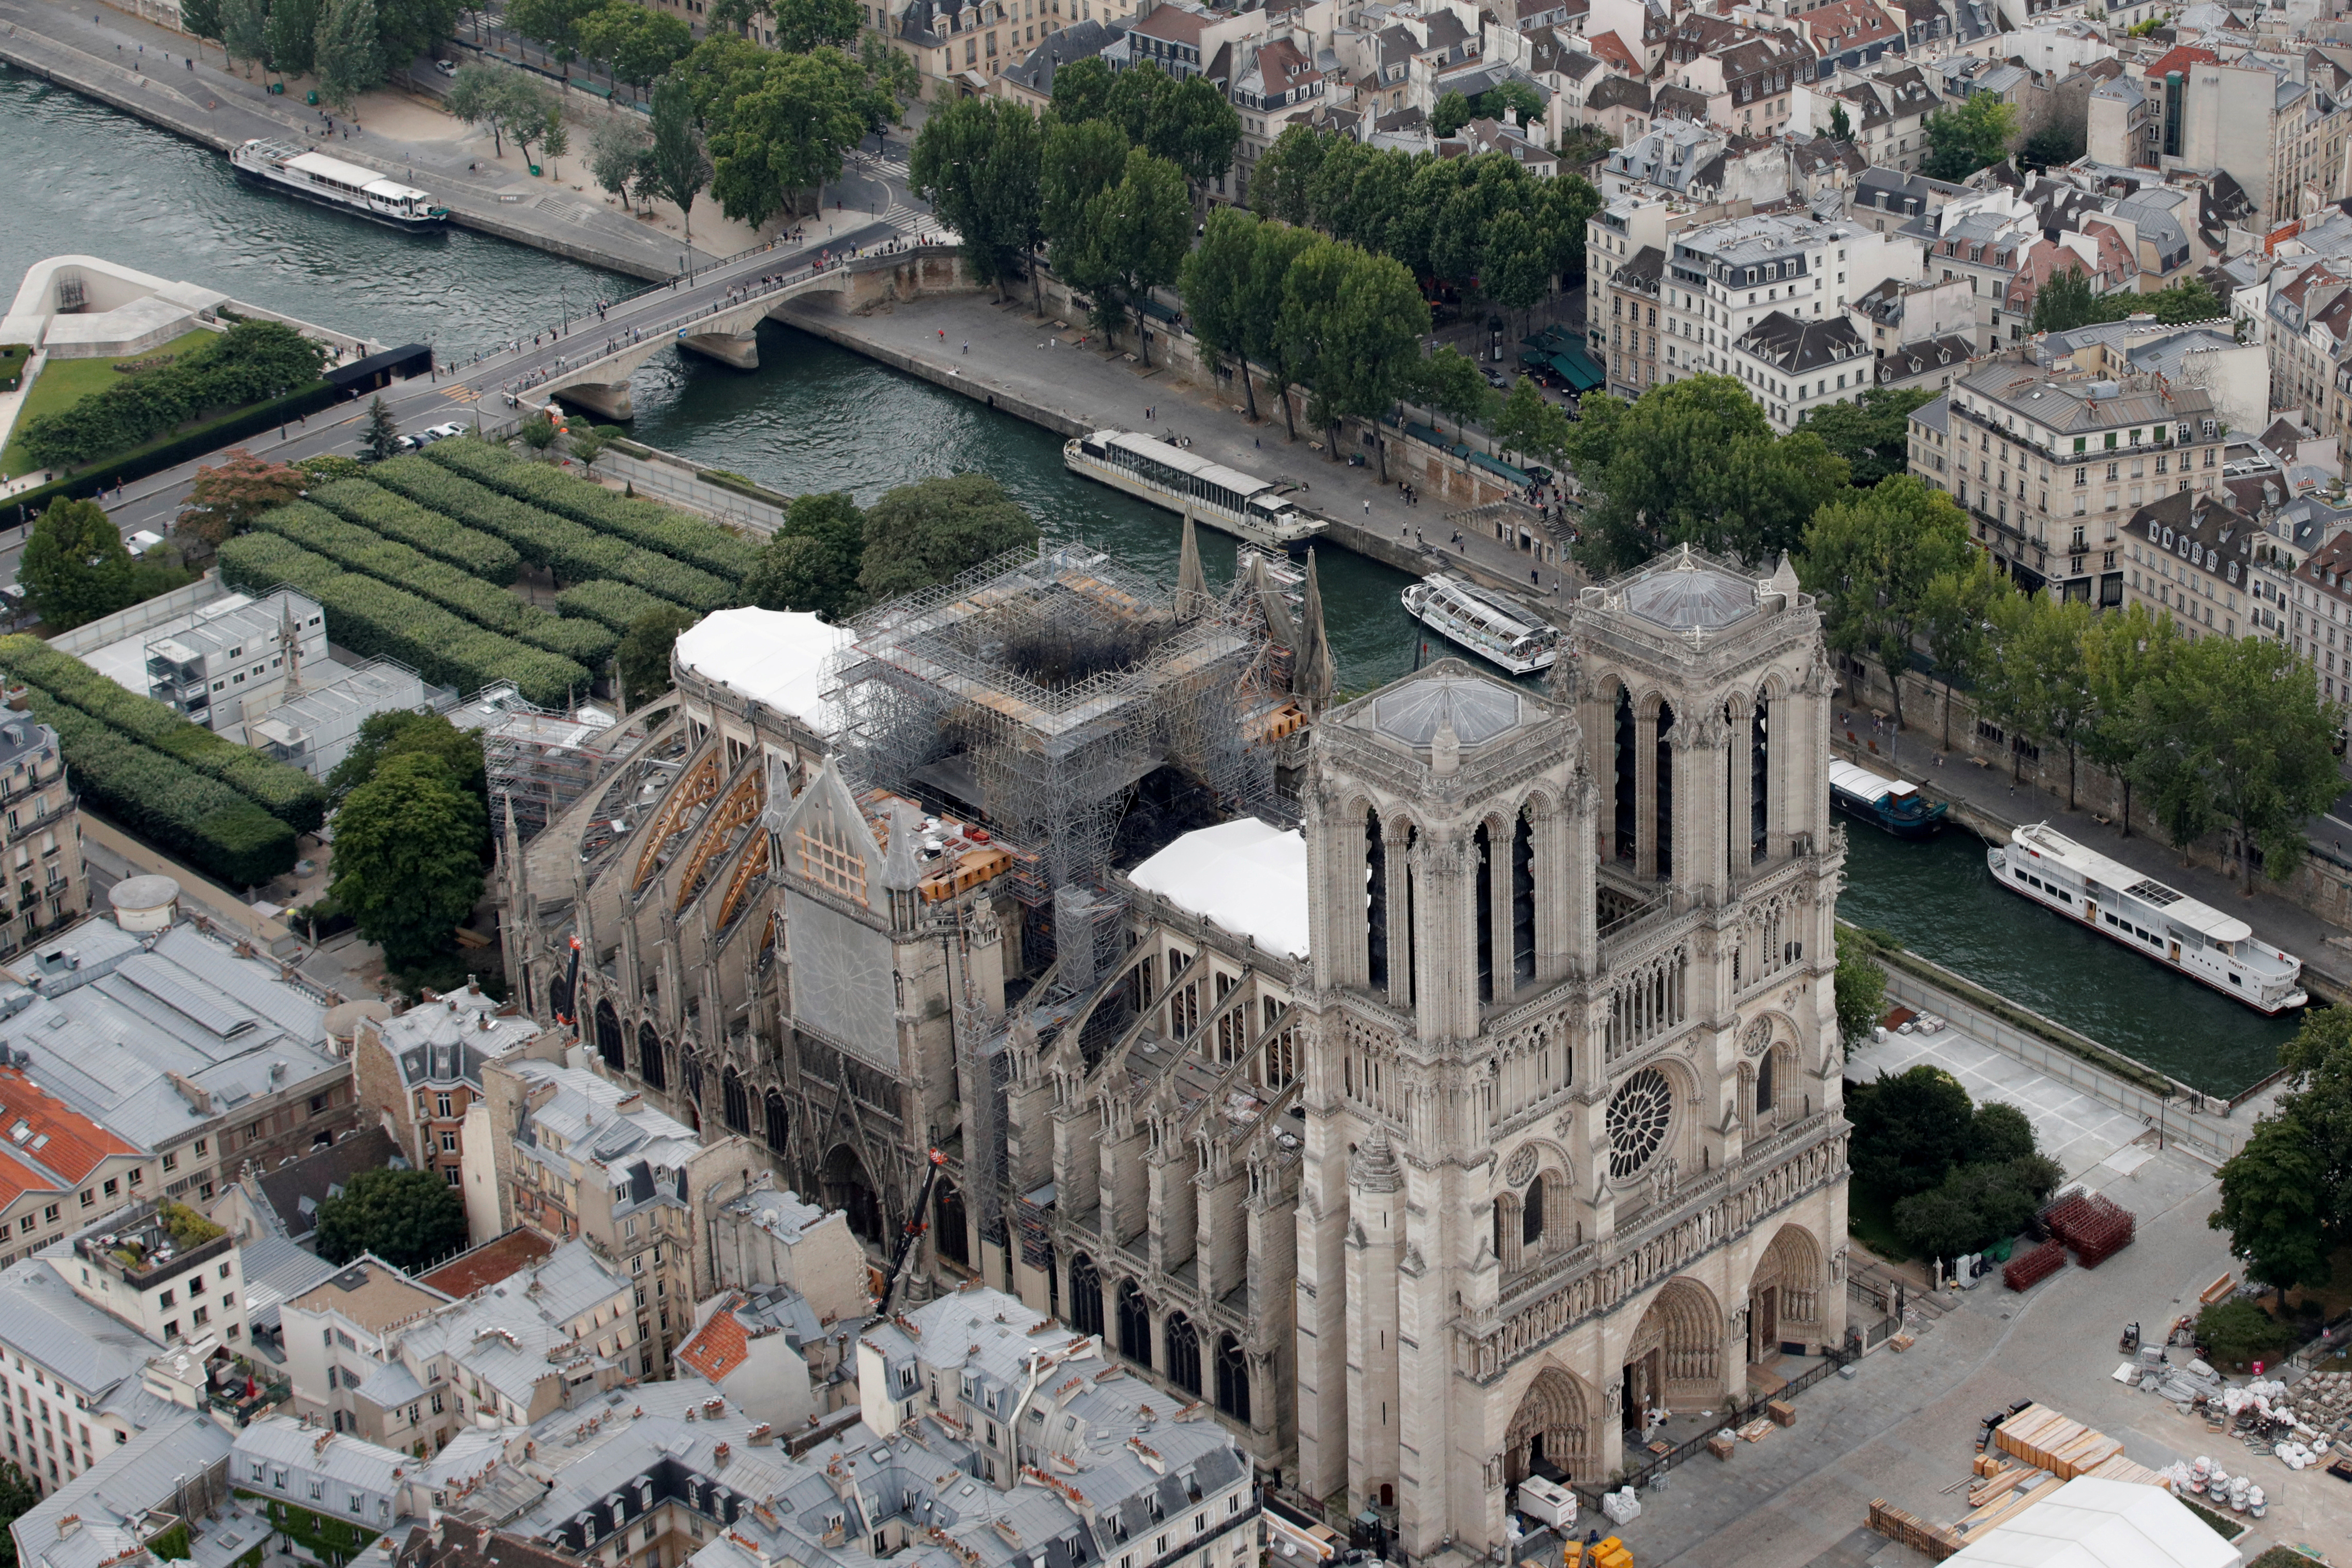 Ola de calor amenaza catedral de Notre Dame tras arrasador incendio